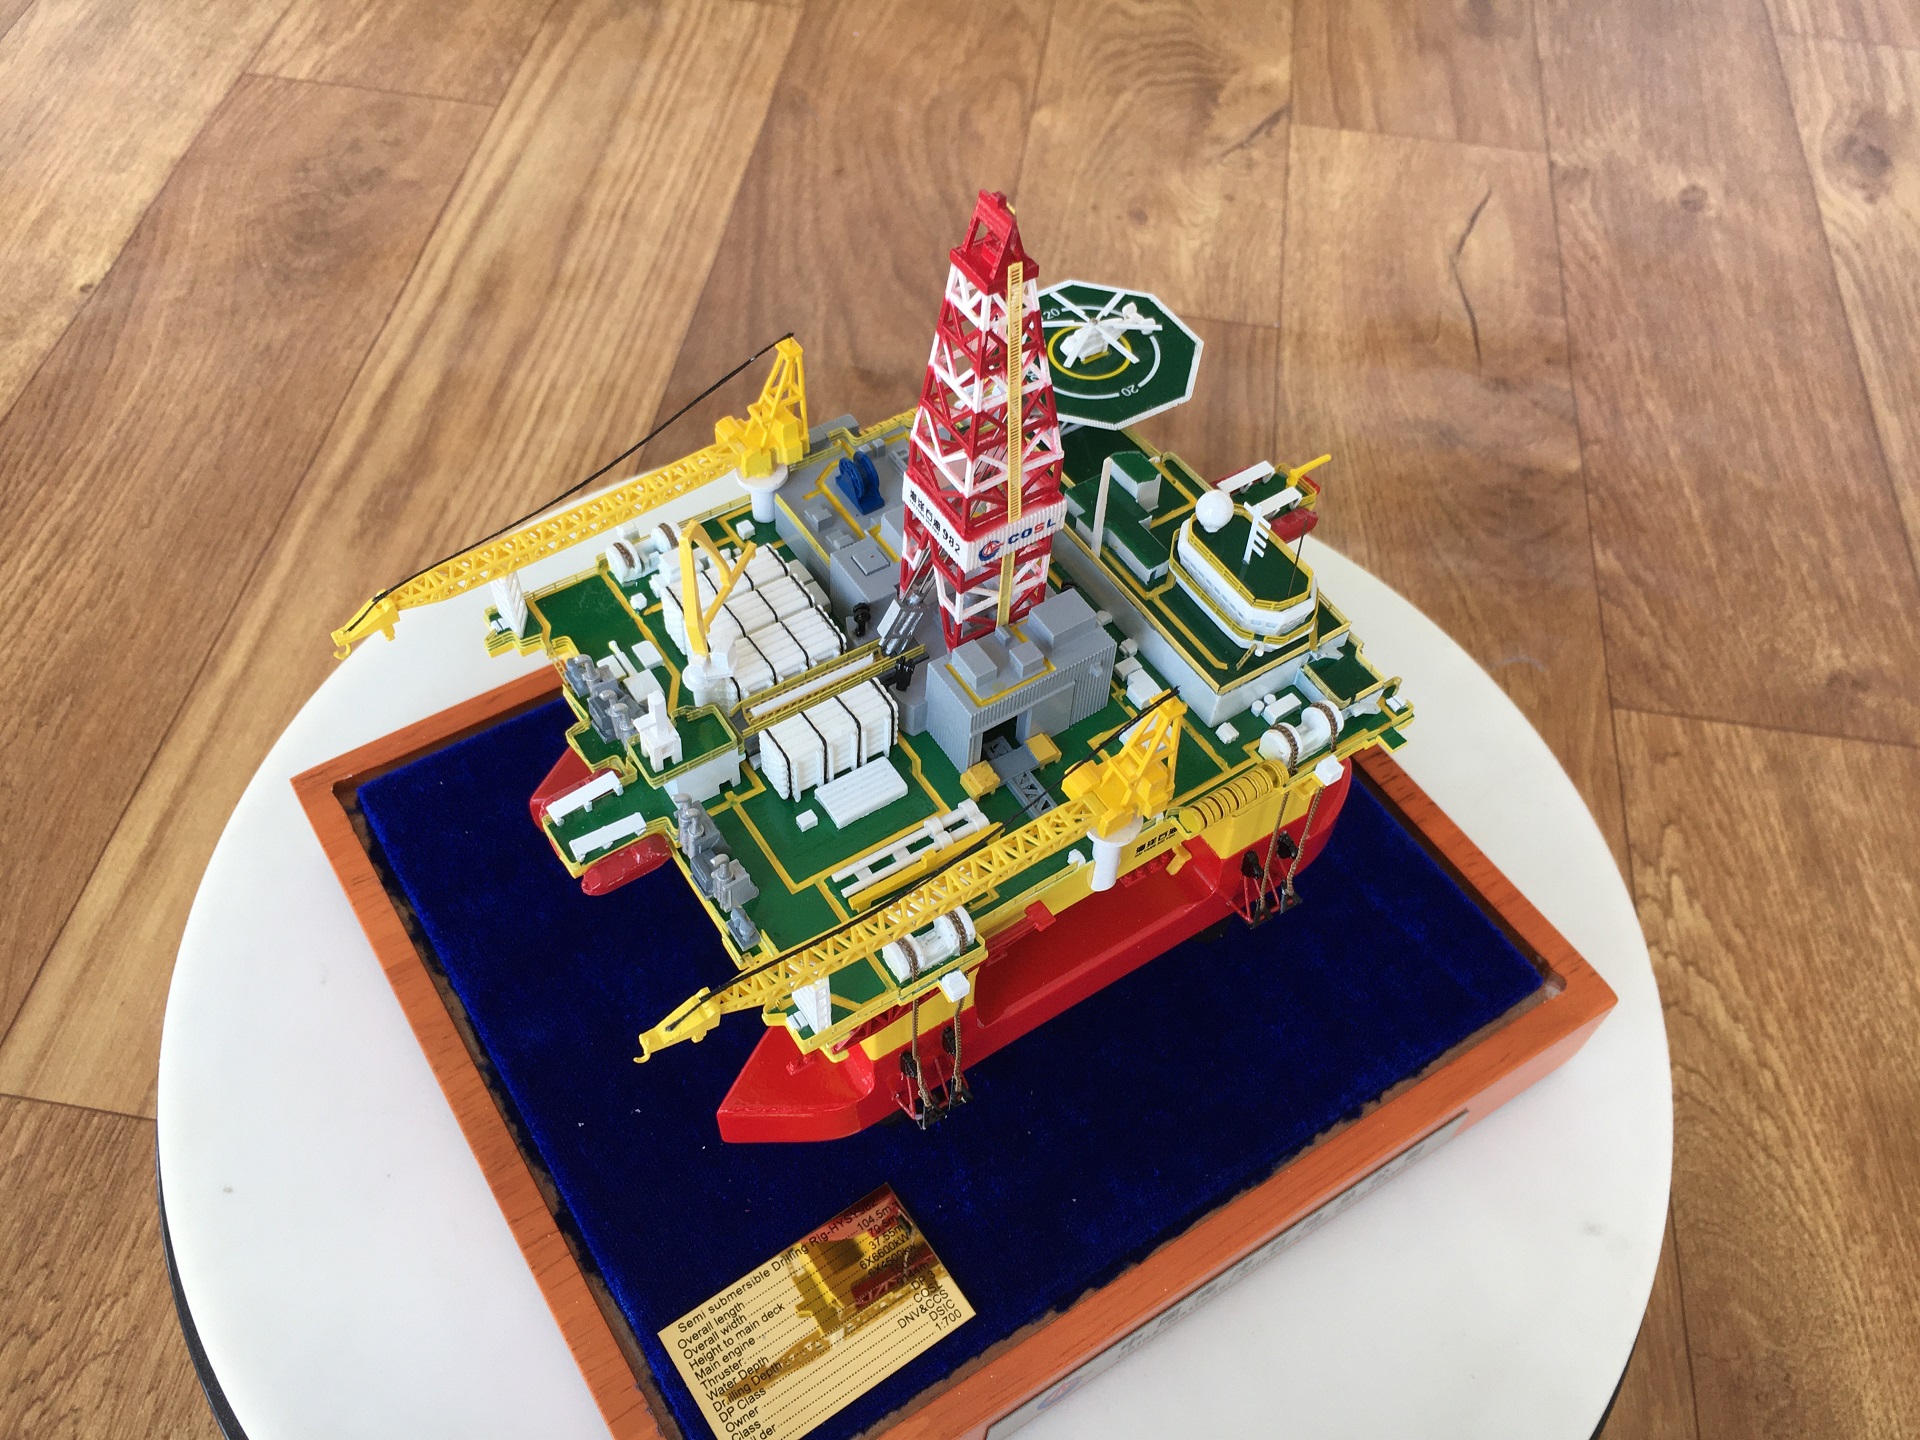 1/700 oil platform scale model, offshore platform Die-cast scale model, offshore drilling rig Diecast scale model, Hai Yang Shi You 982 Semi-Submersible Oil Platform Scale Model.